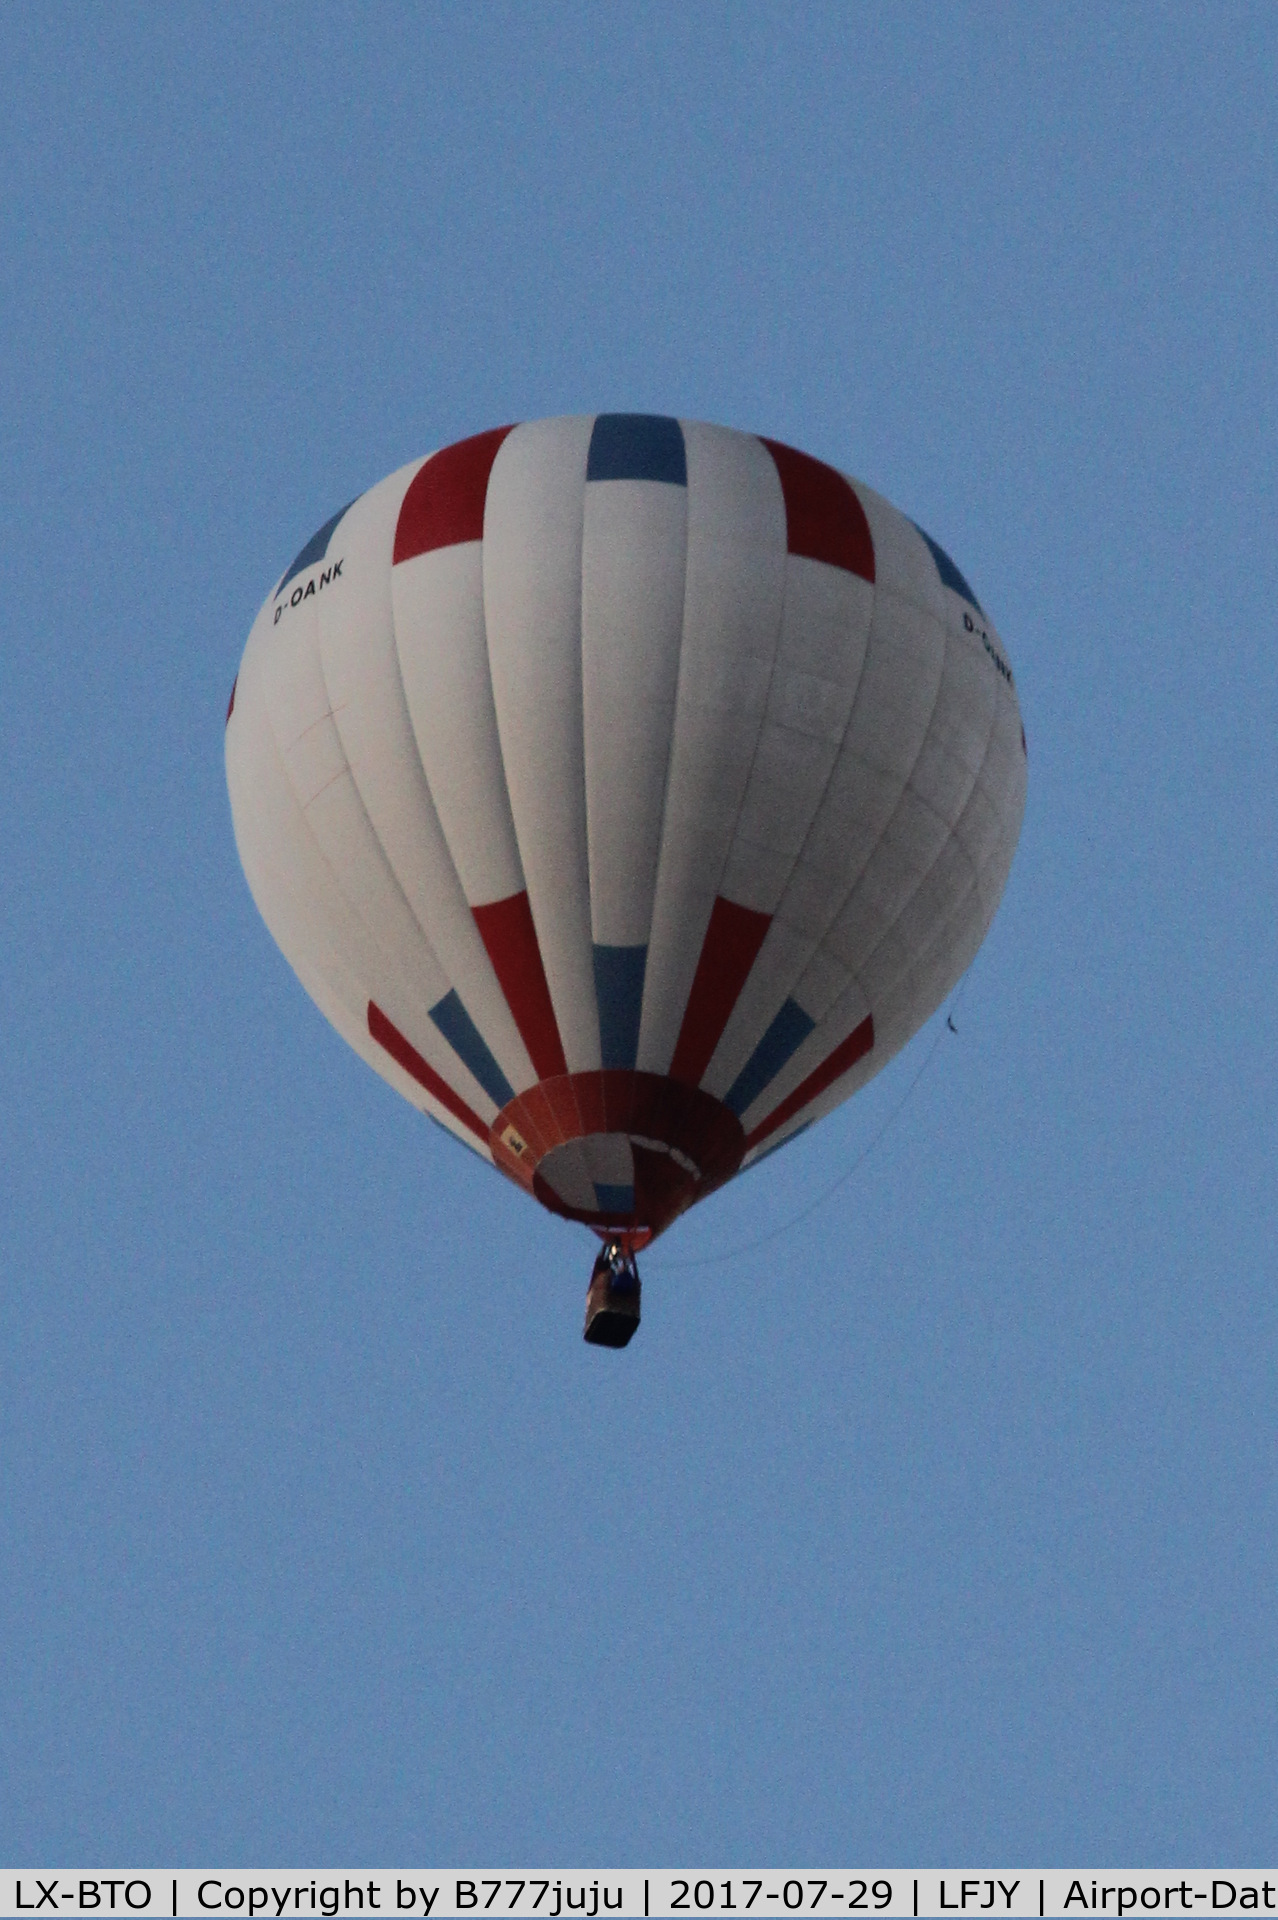 LX-BTO, Schroeder Fire Balloons G34/24 C/N 1167, at Chambley